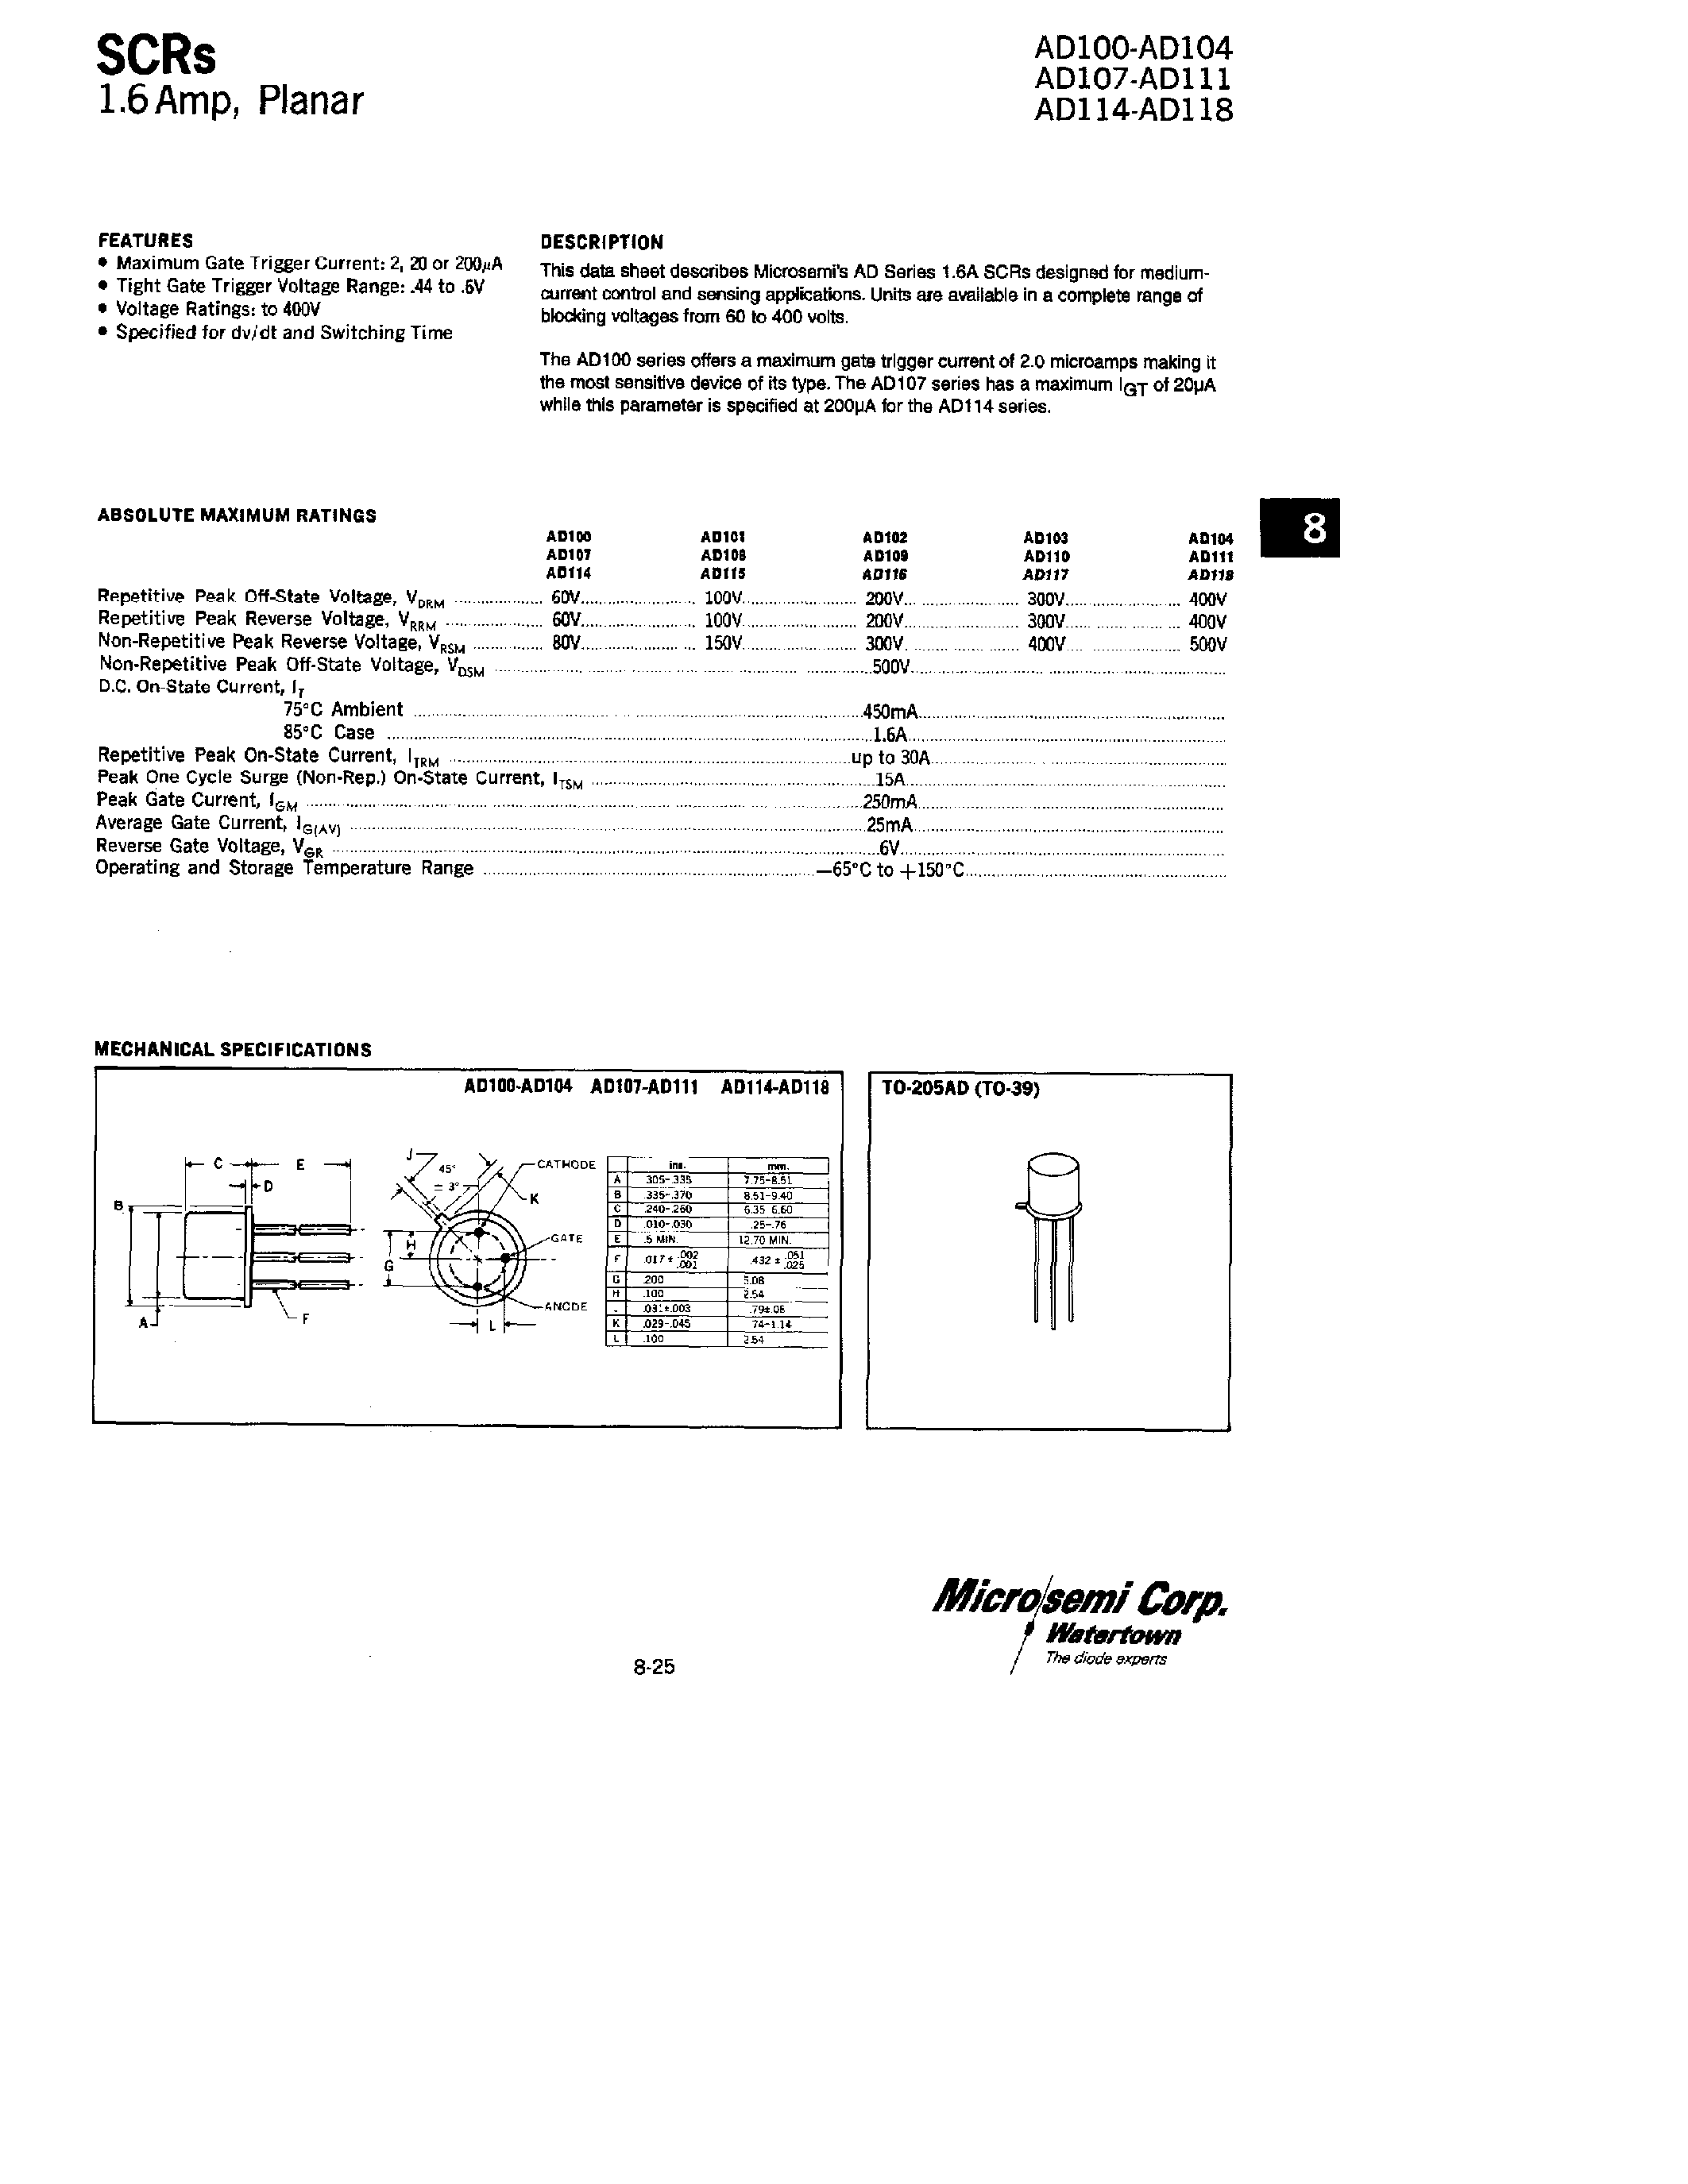 Datasheet AD111 - SCRs 1.5 Amp/ Planar page 1